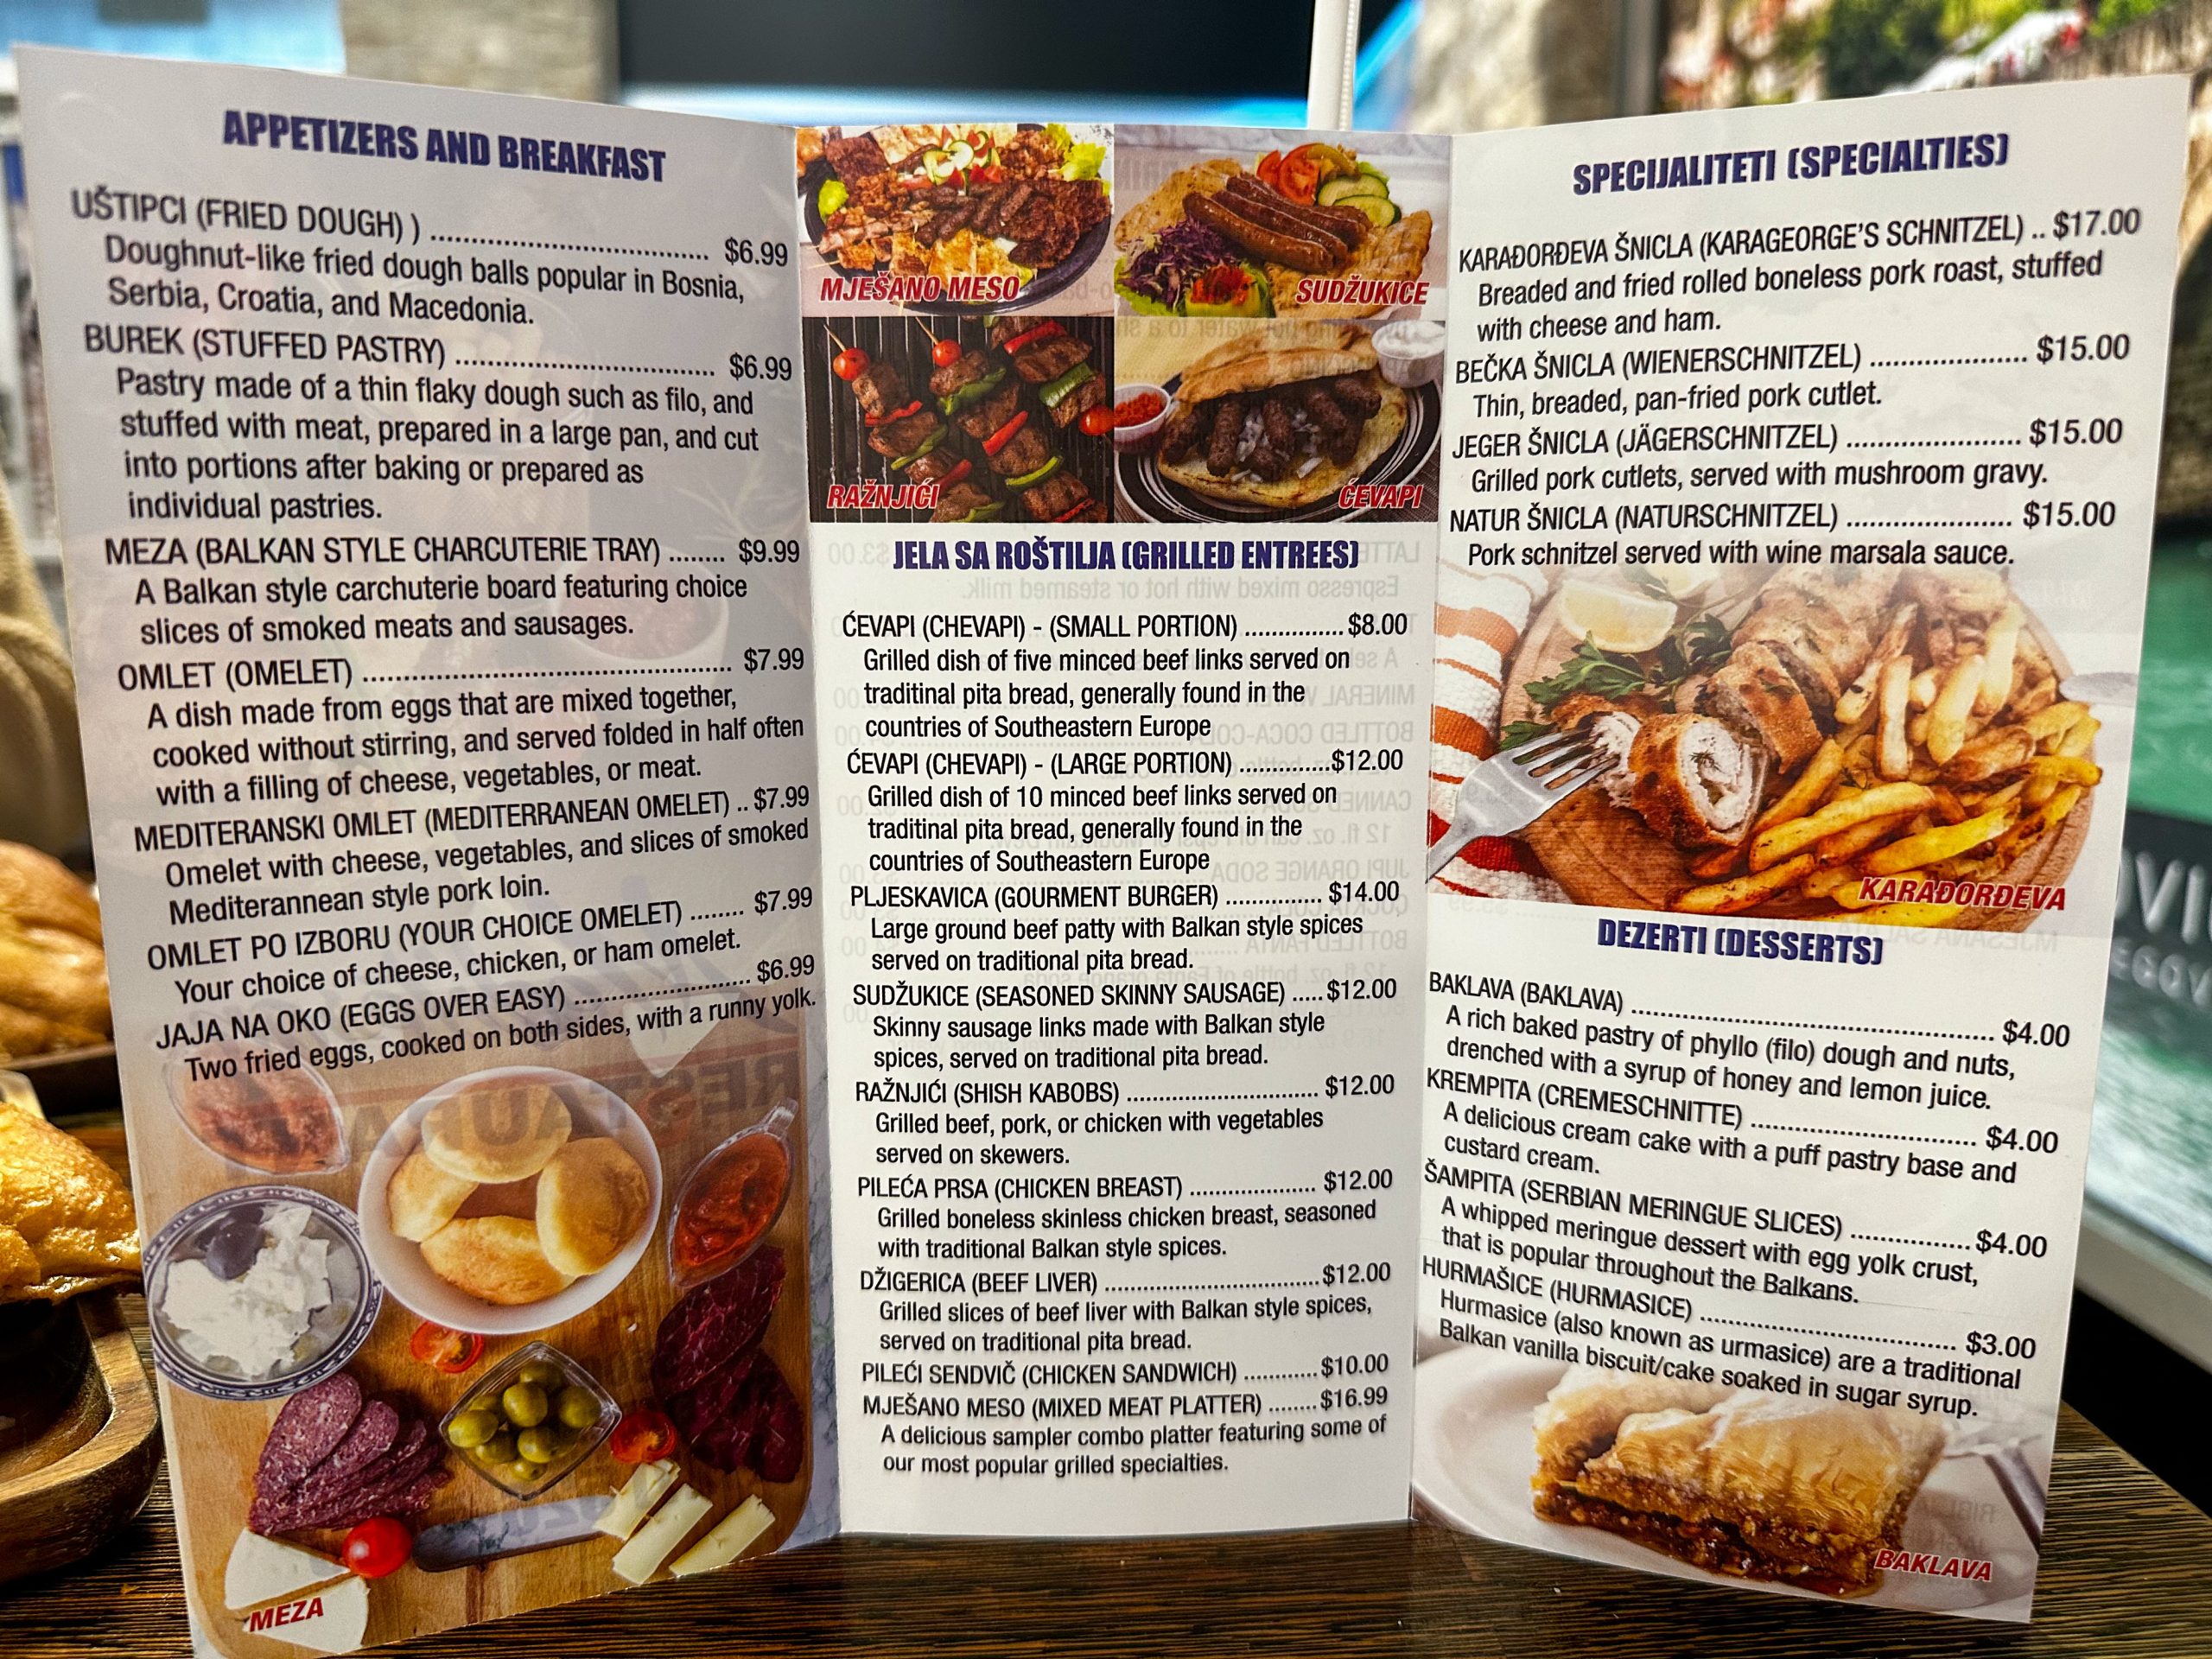 The menu at Serbian Mediteran Restaurant